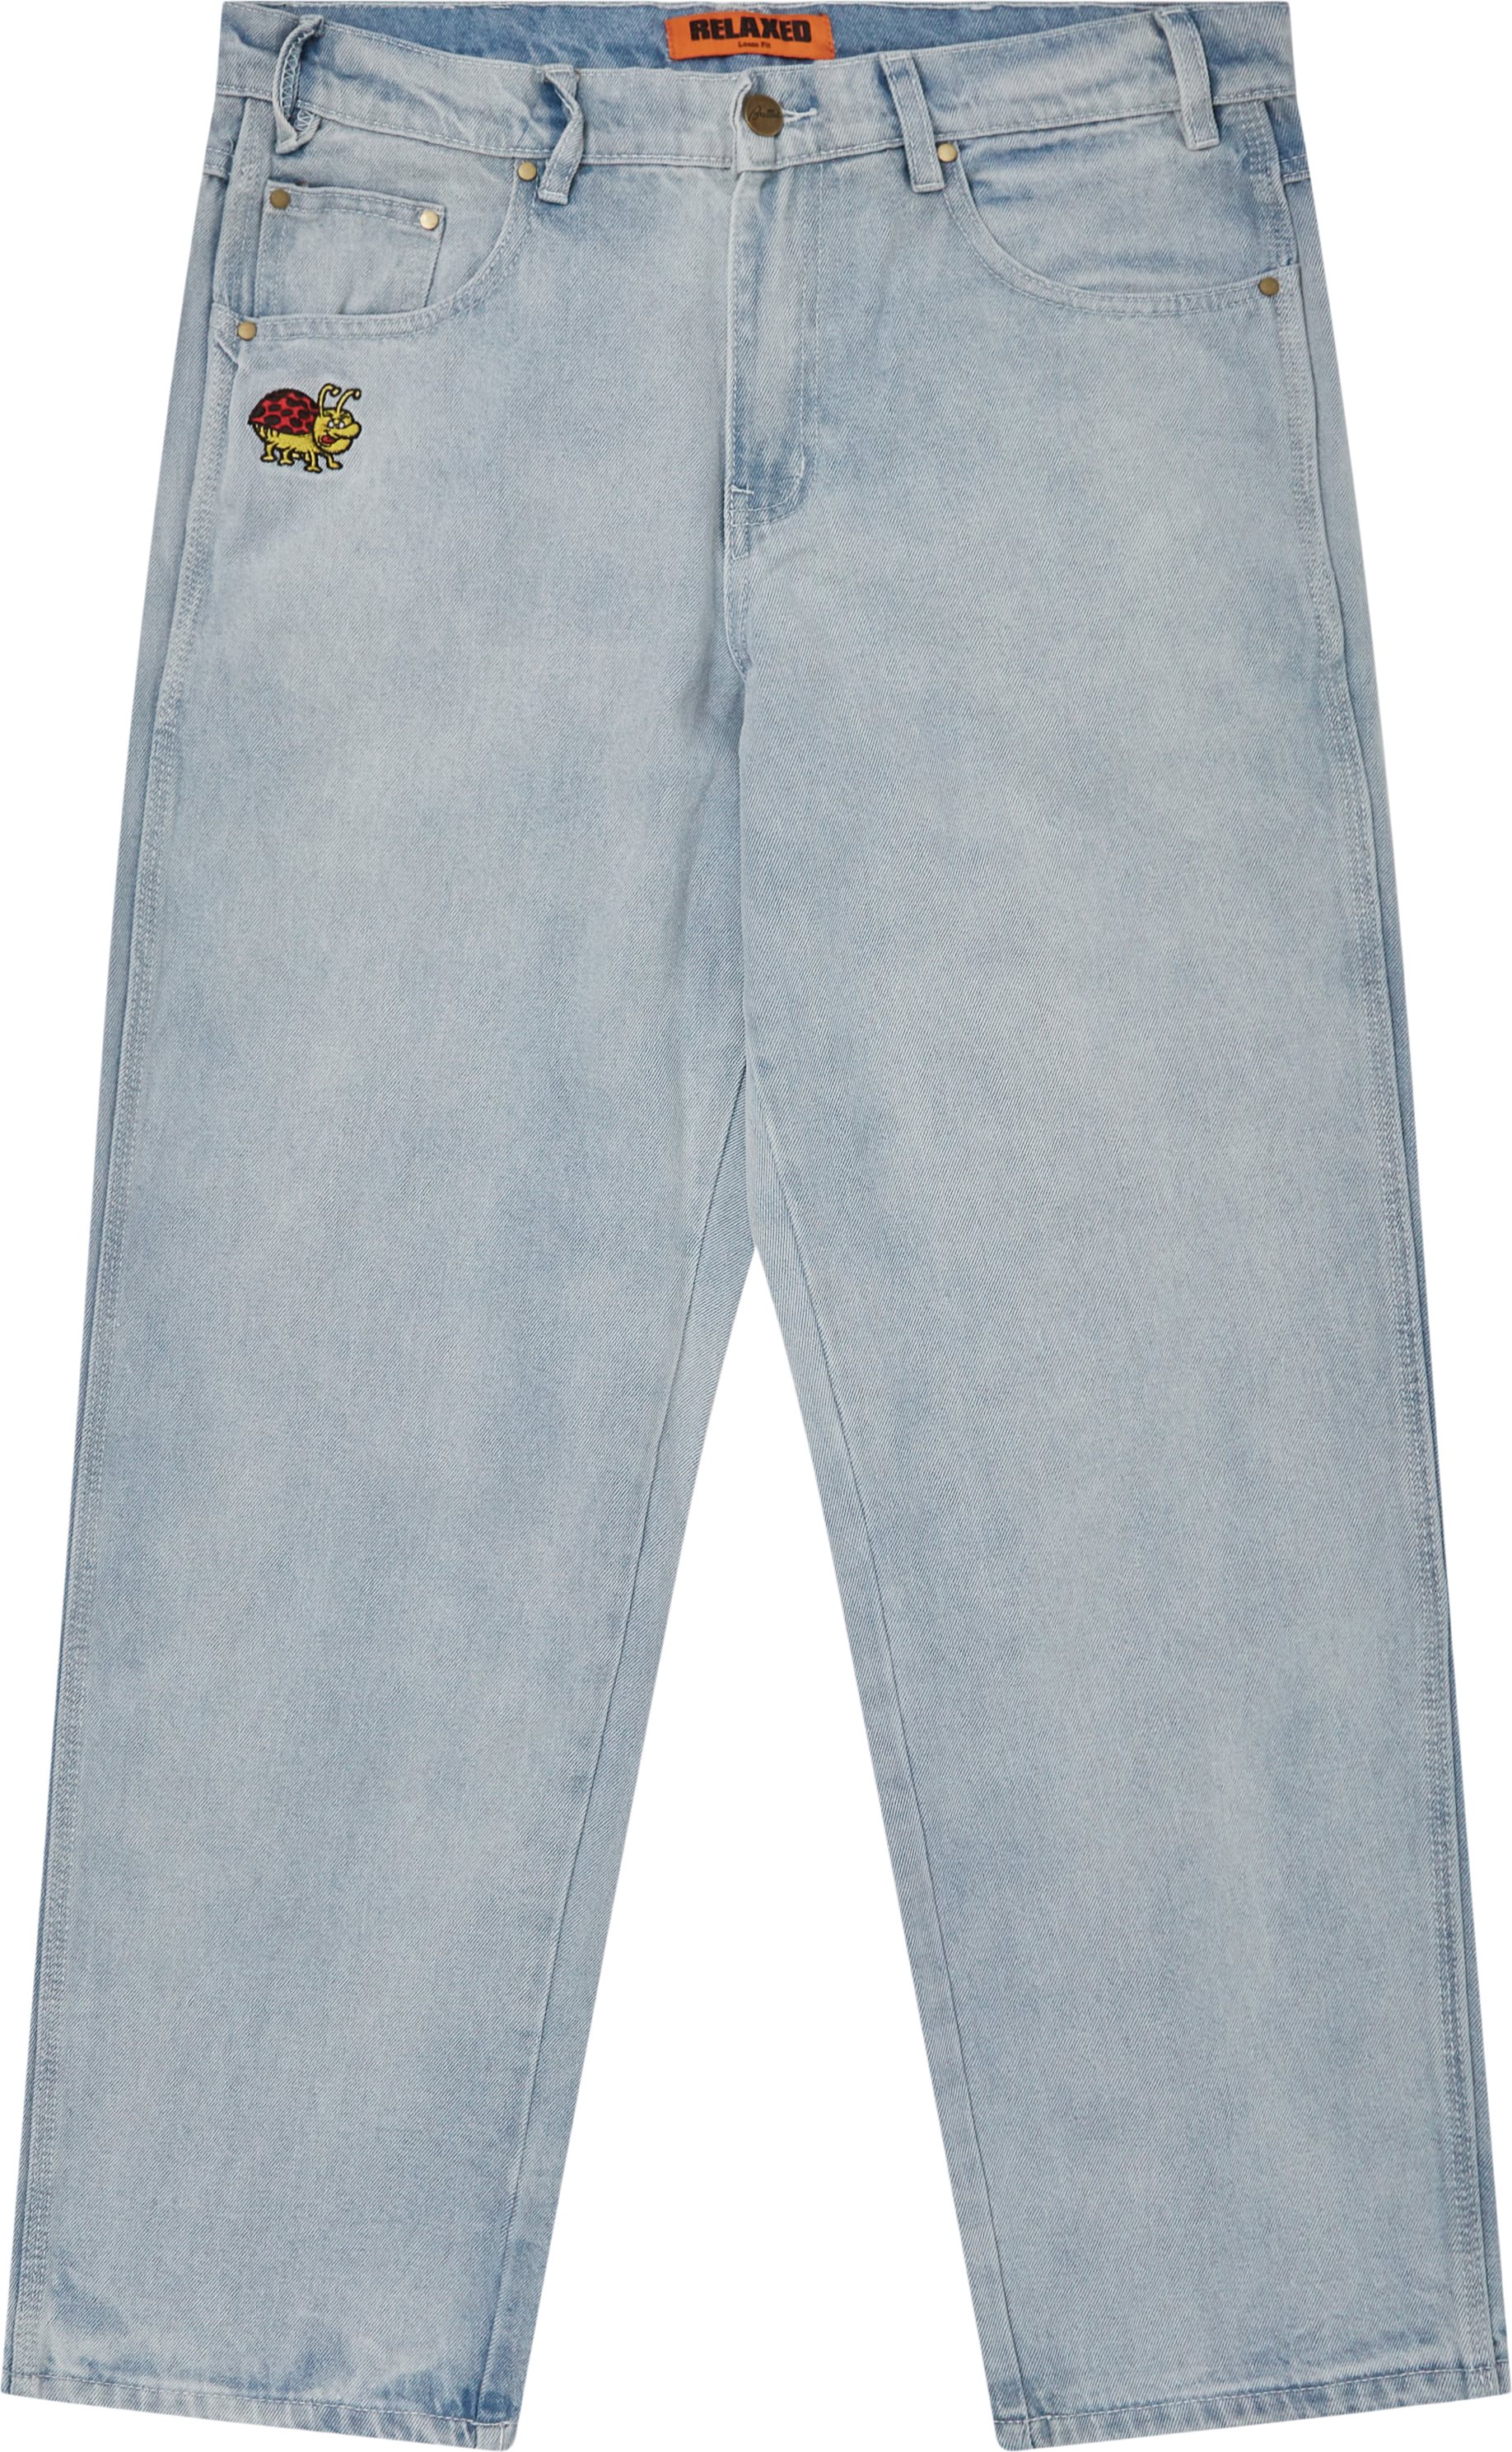 Bug Denim Pants - Jeans - Loose fit - Denim